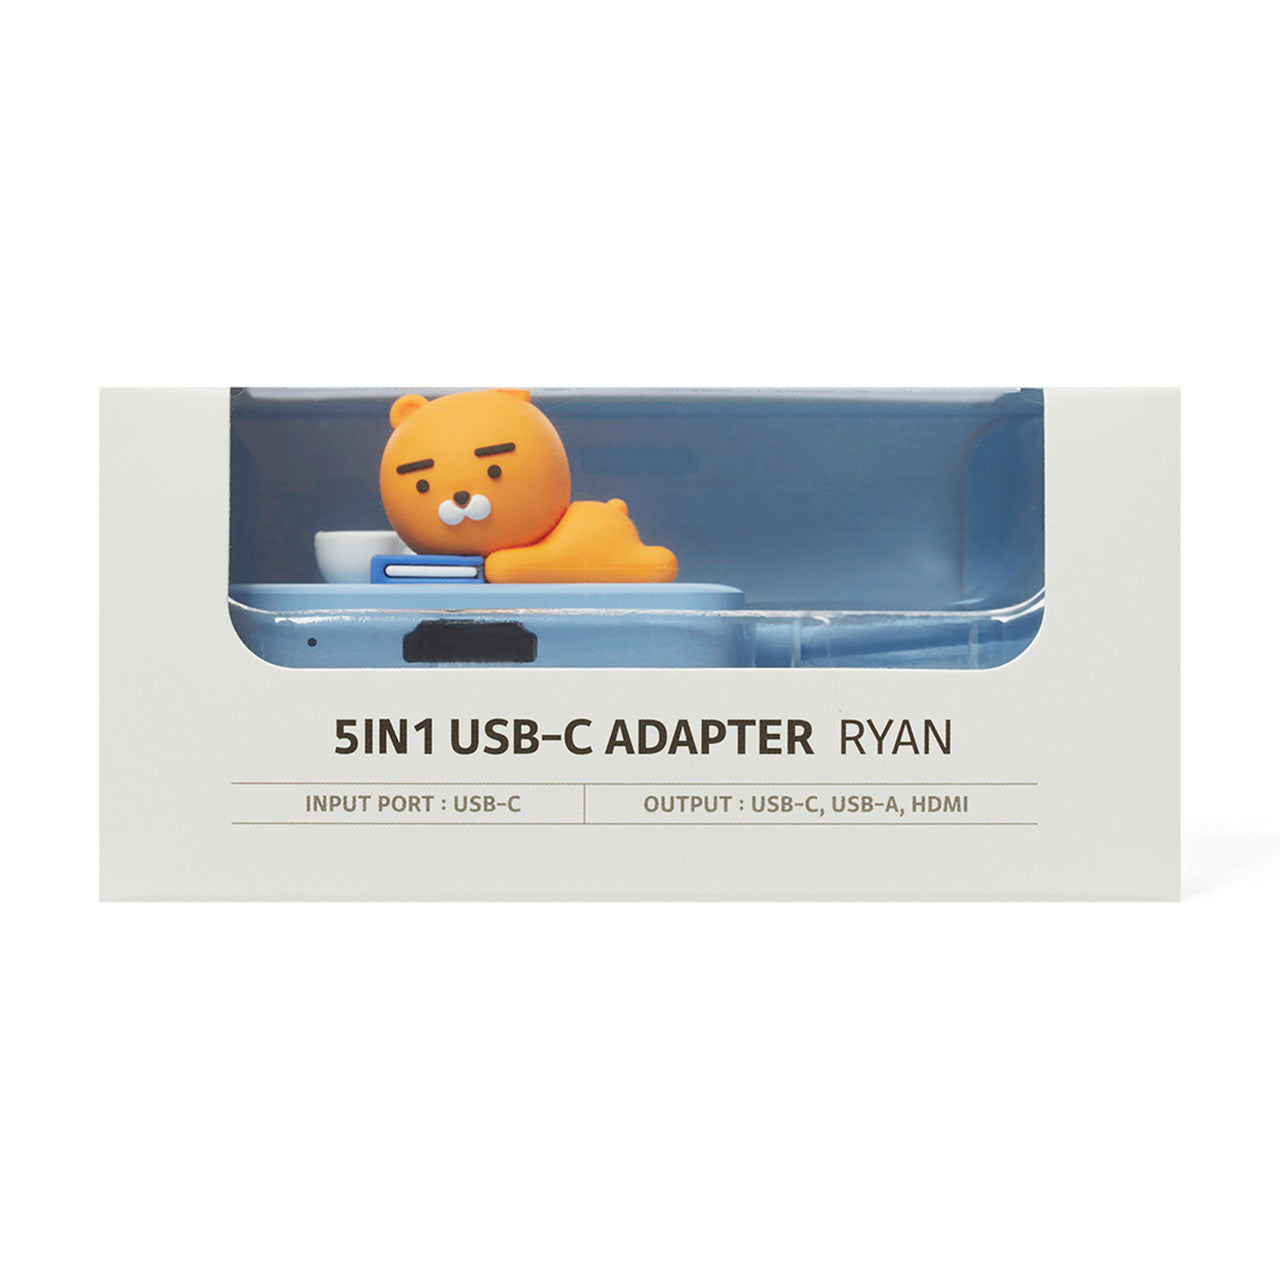 5in1 USB-C Adapter-Ryan